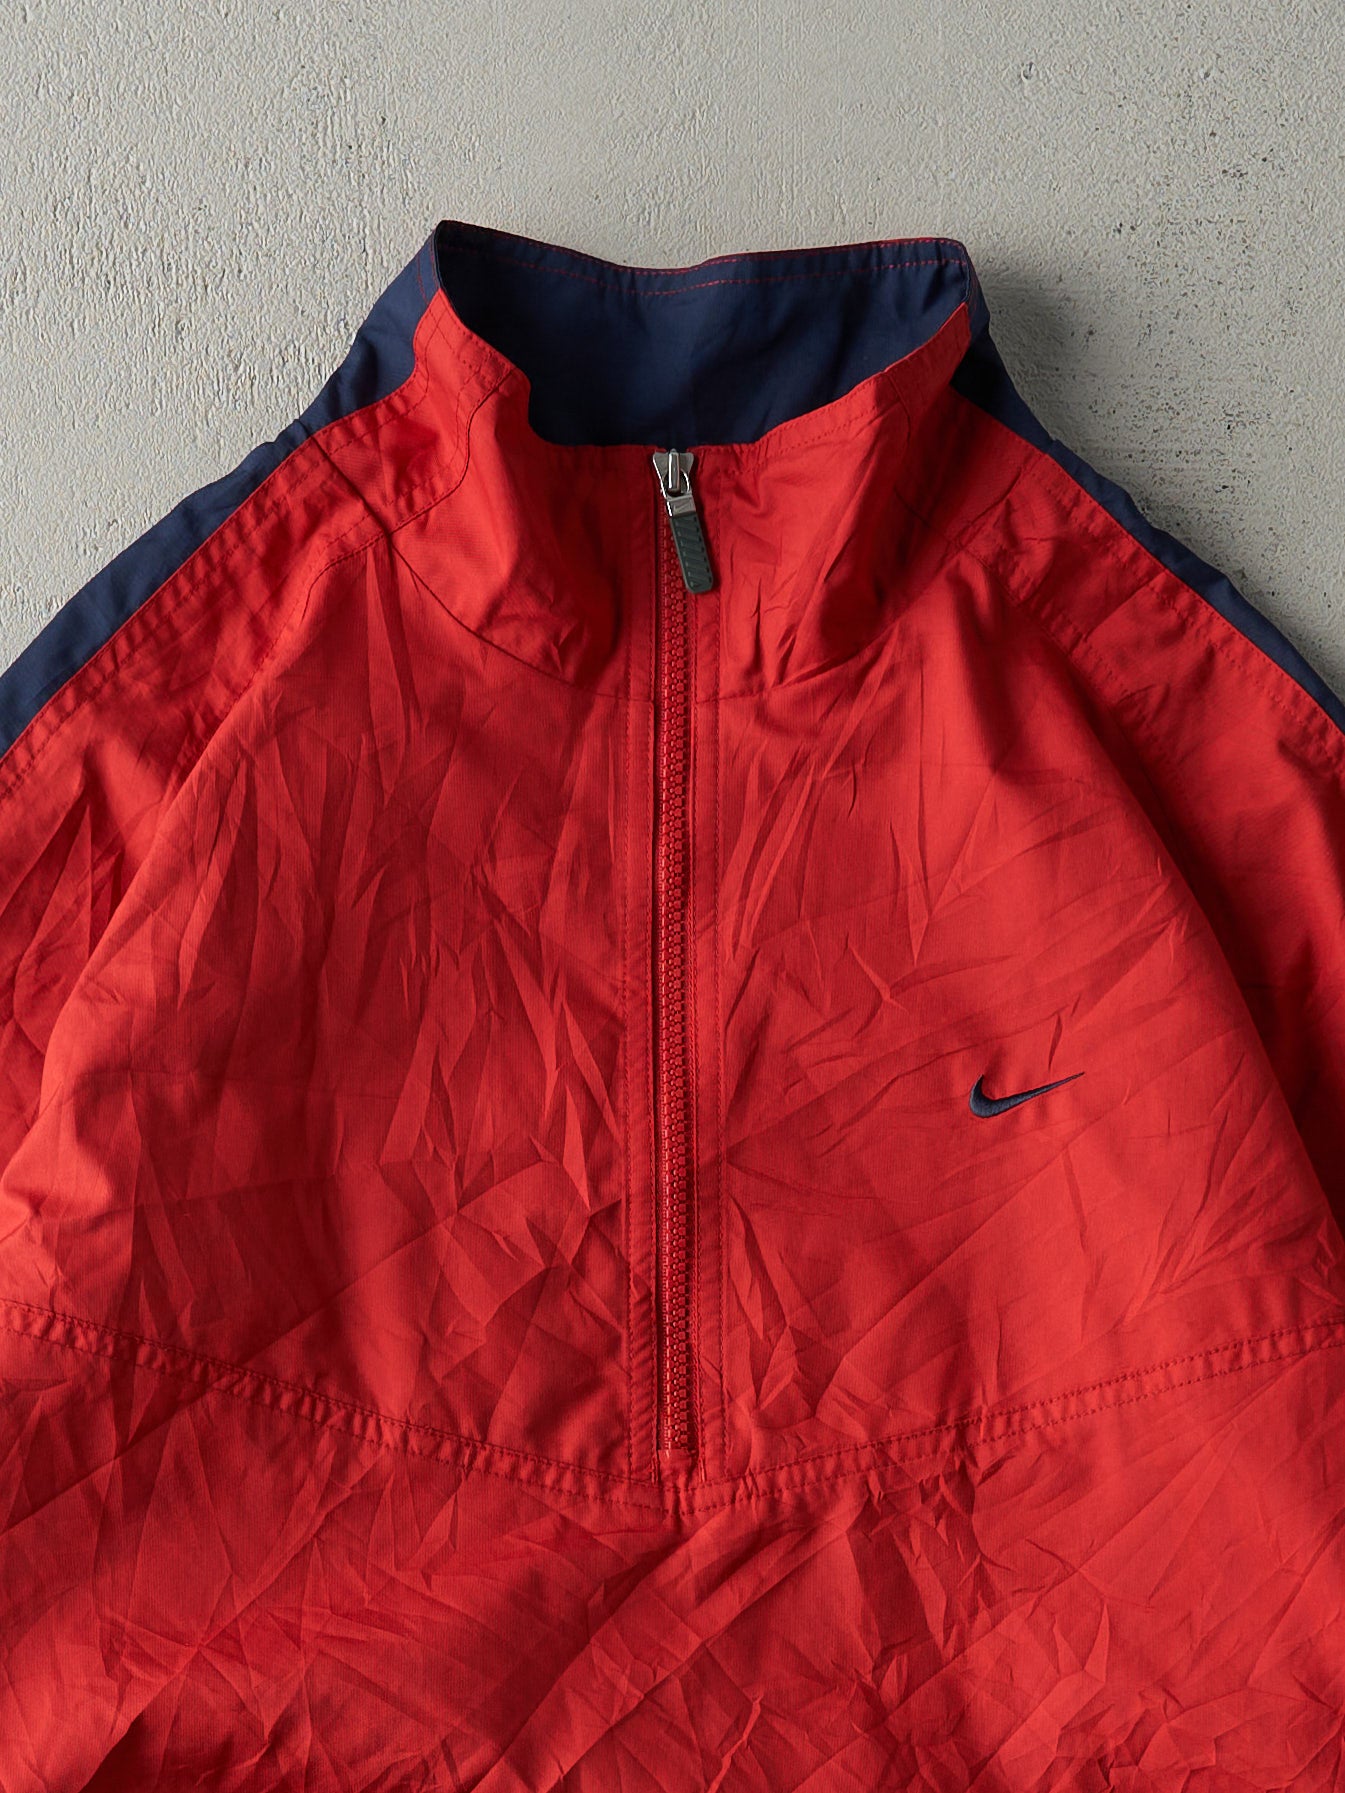 Vintage 90s Red and Navy Nike Swoosh Quarter Zip Windbreaker Jacket (M/L)